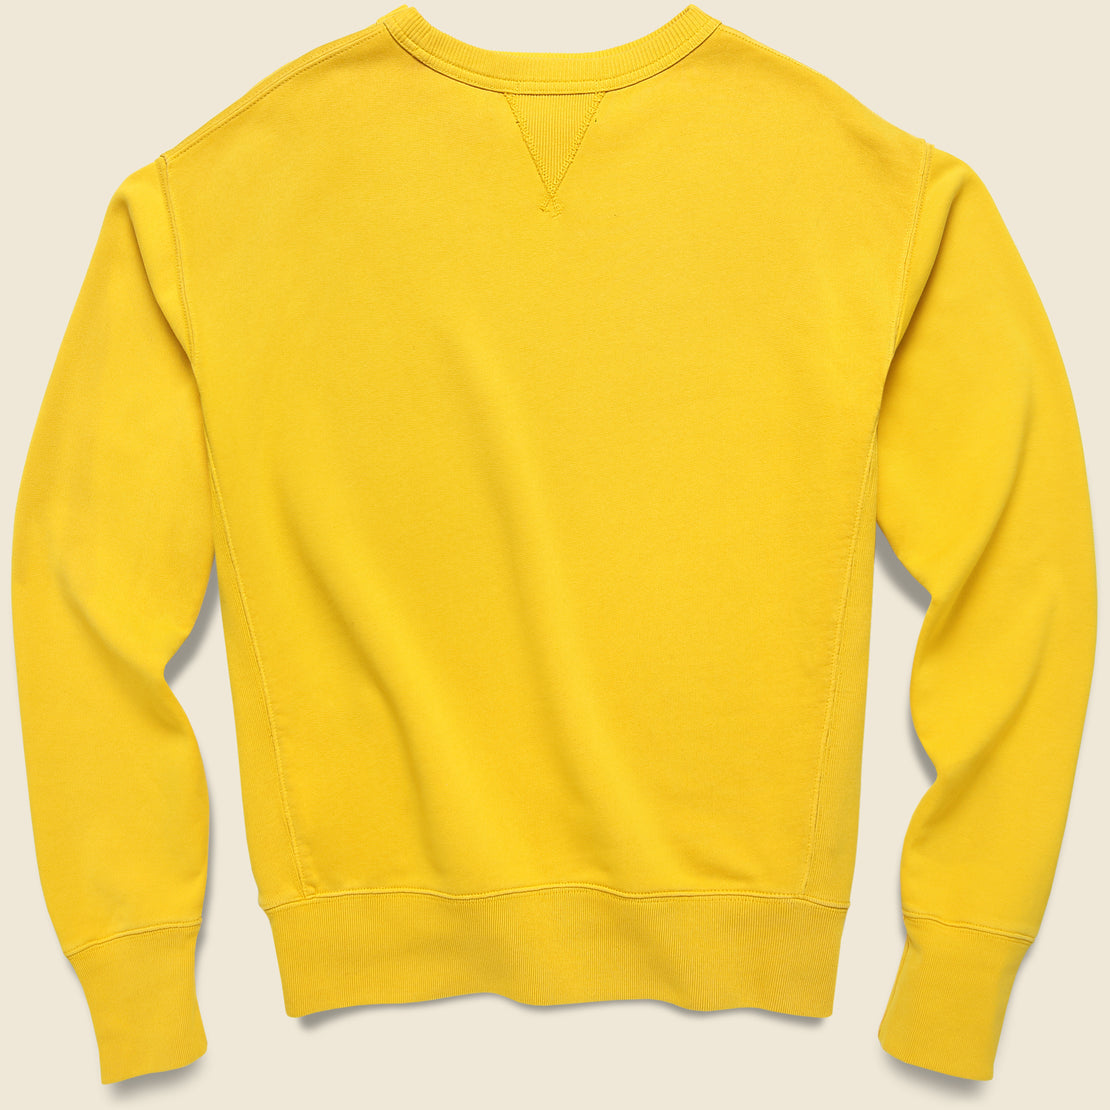 French Terry Graphic Sweatshirt - Gold - RRL - STAG Provisions - Tops - Fleece / Sweatshirt